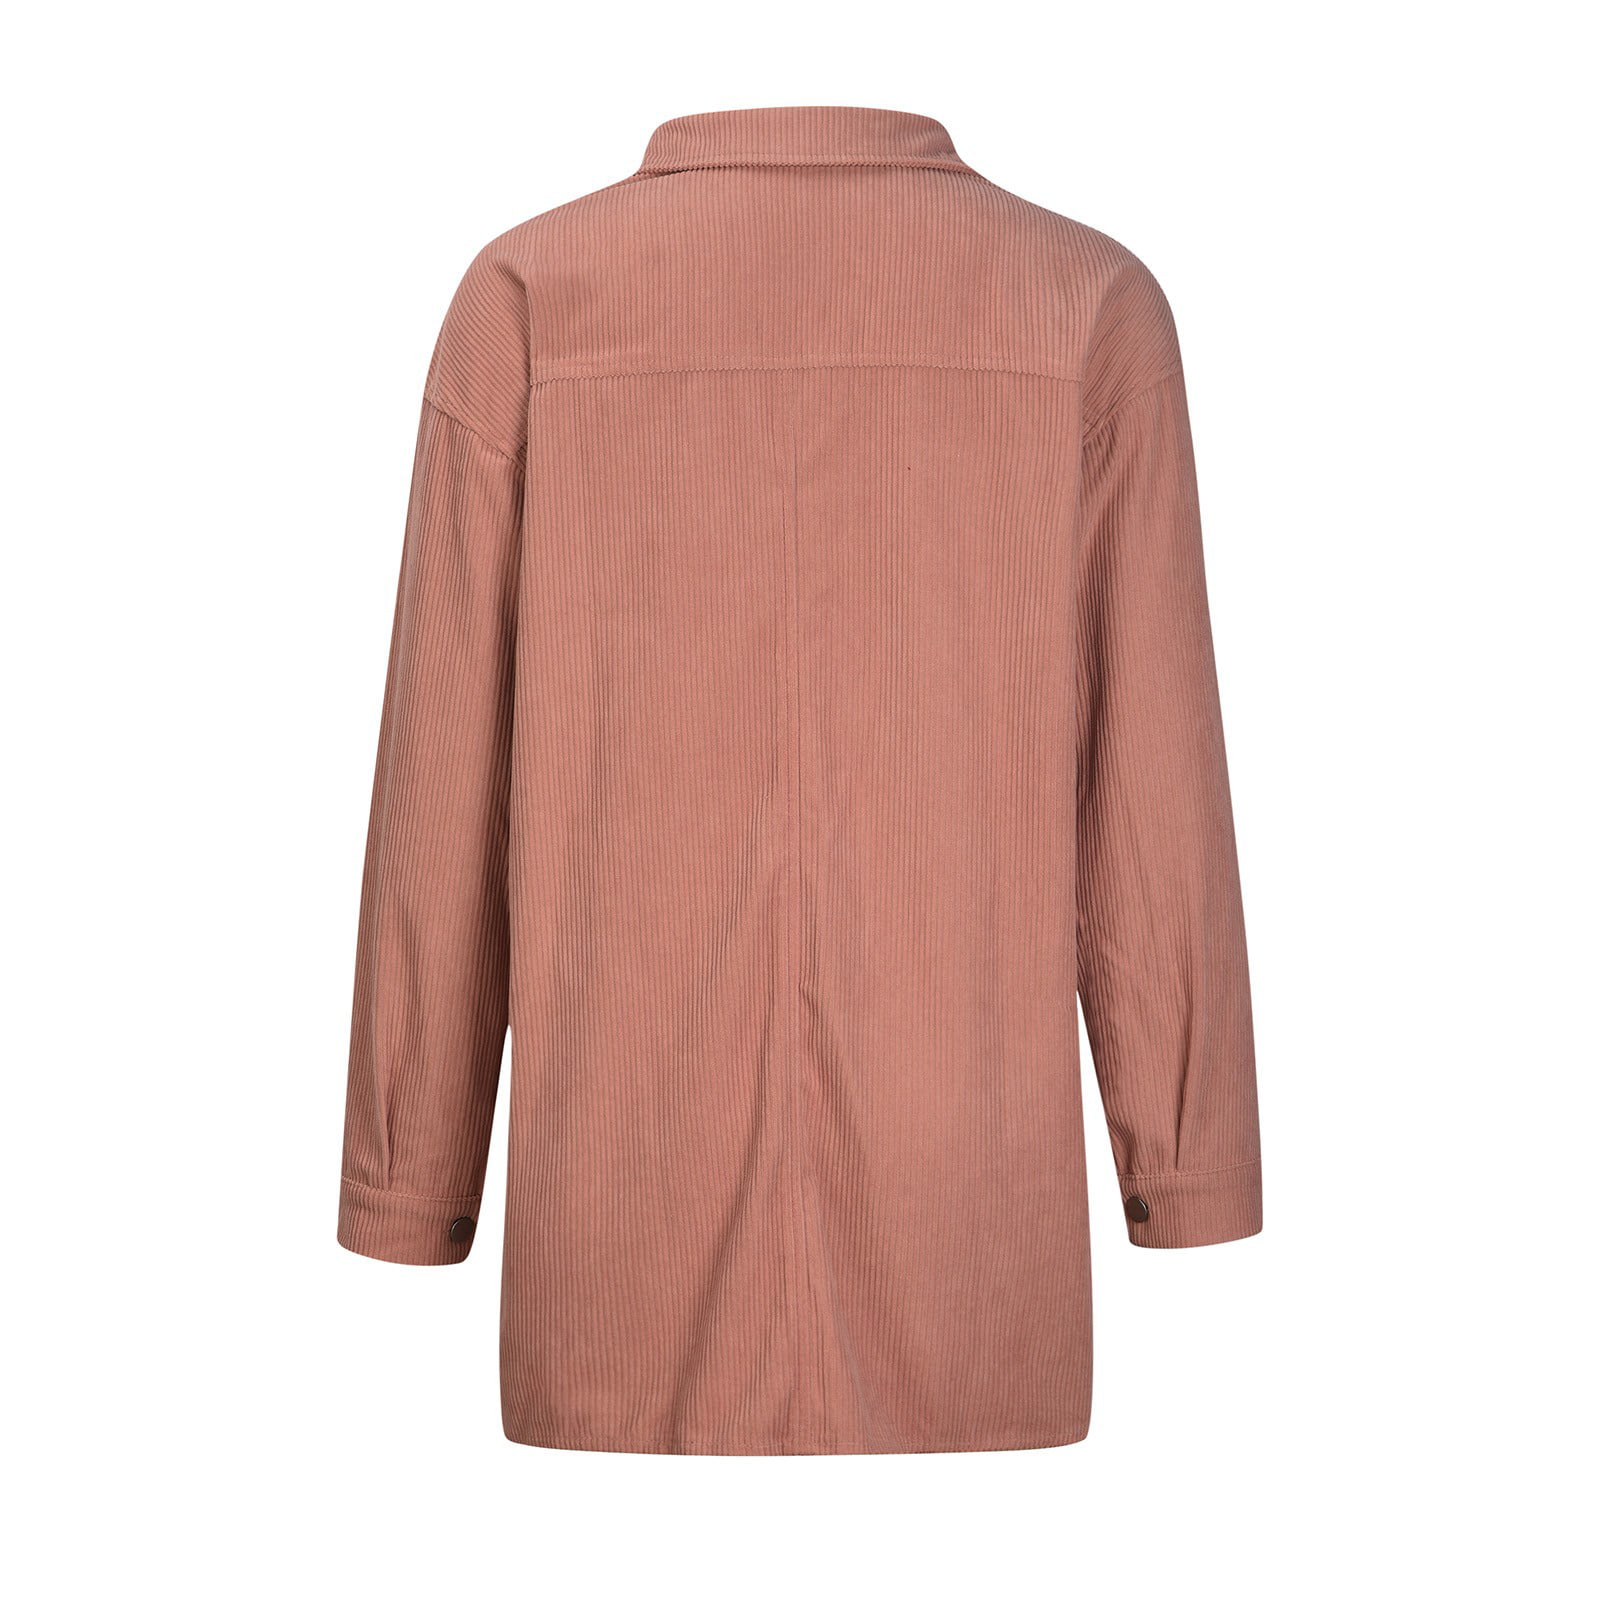 kamera udbytte gåde Deagia Women's Fall Jacket Lapel Solid Color Pocket Button Coat  Recreational Long Sleeve Cardigan Tops Fashion Jackets for Women M #10768 -  Walmart.com